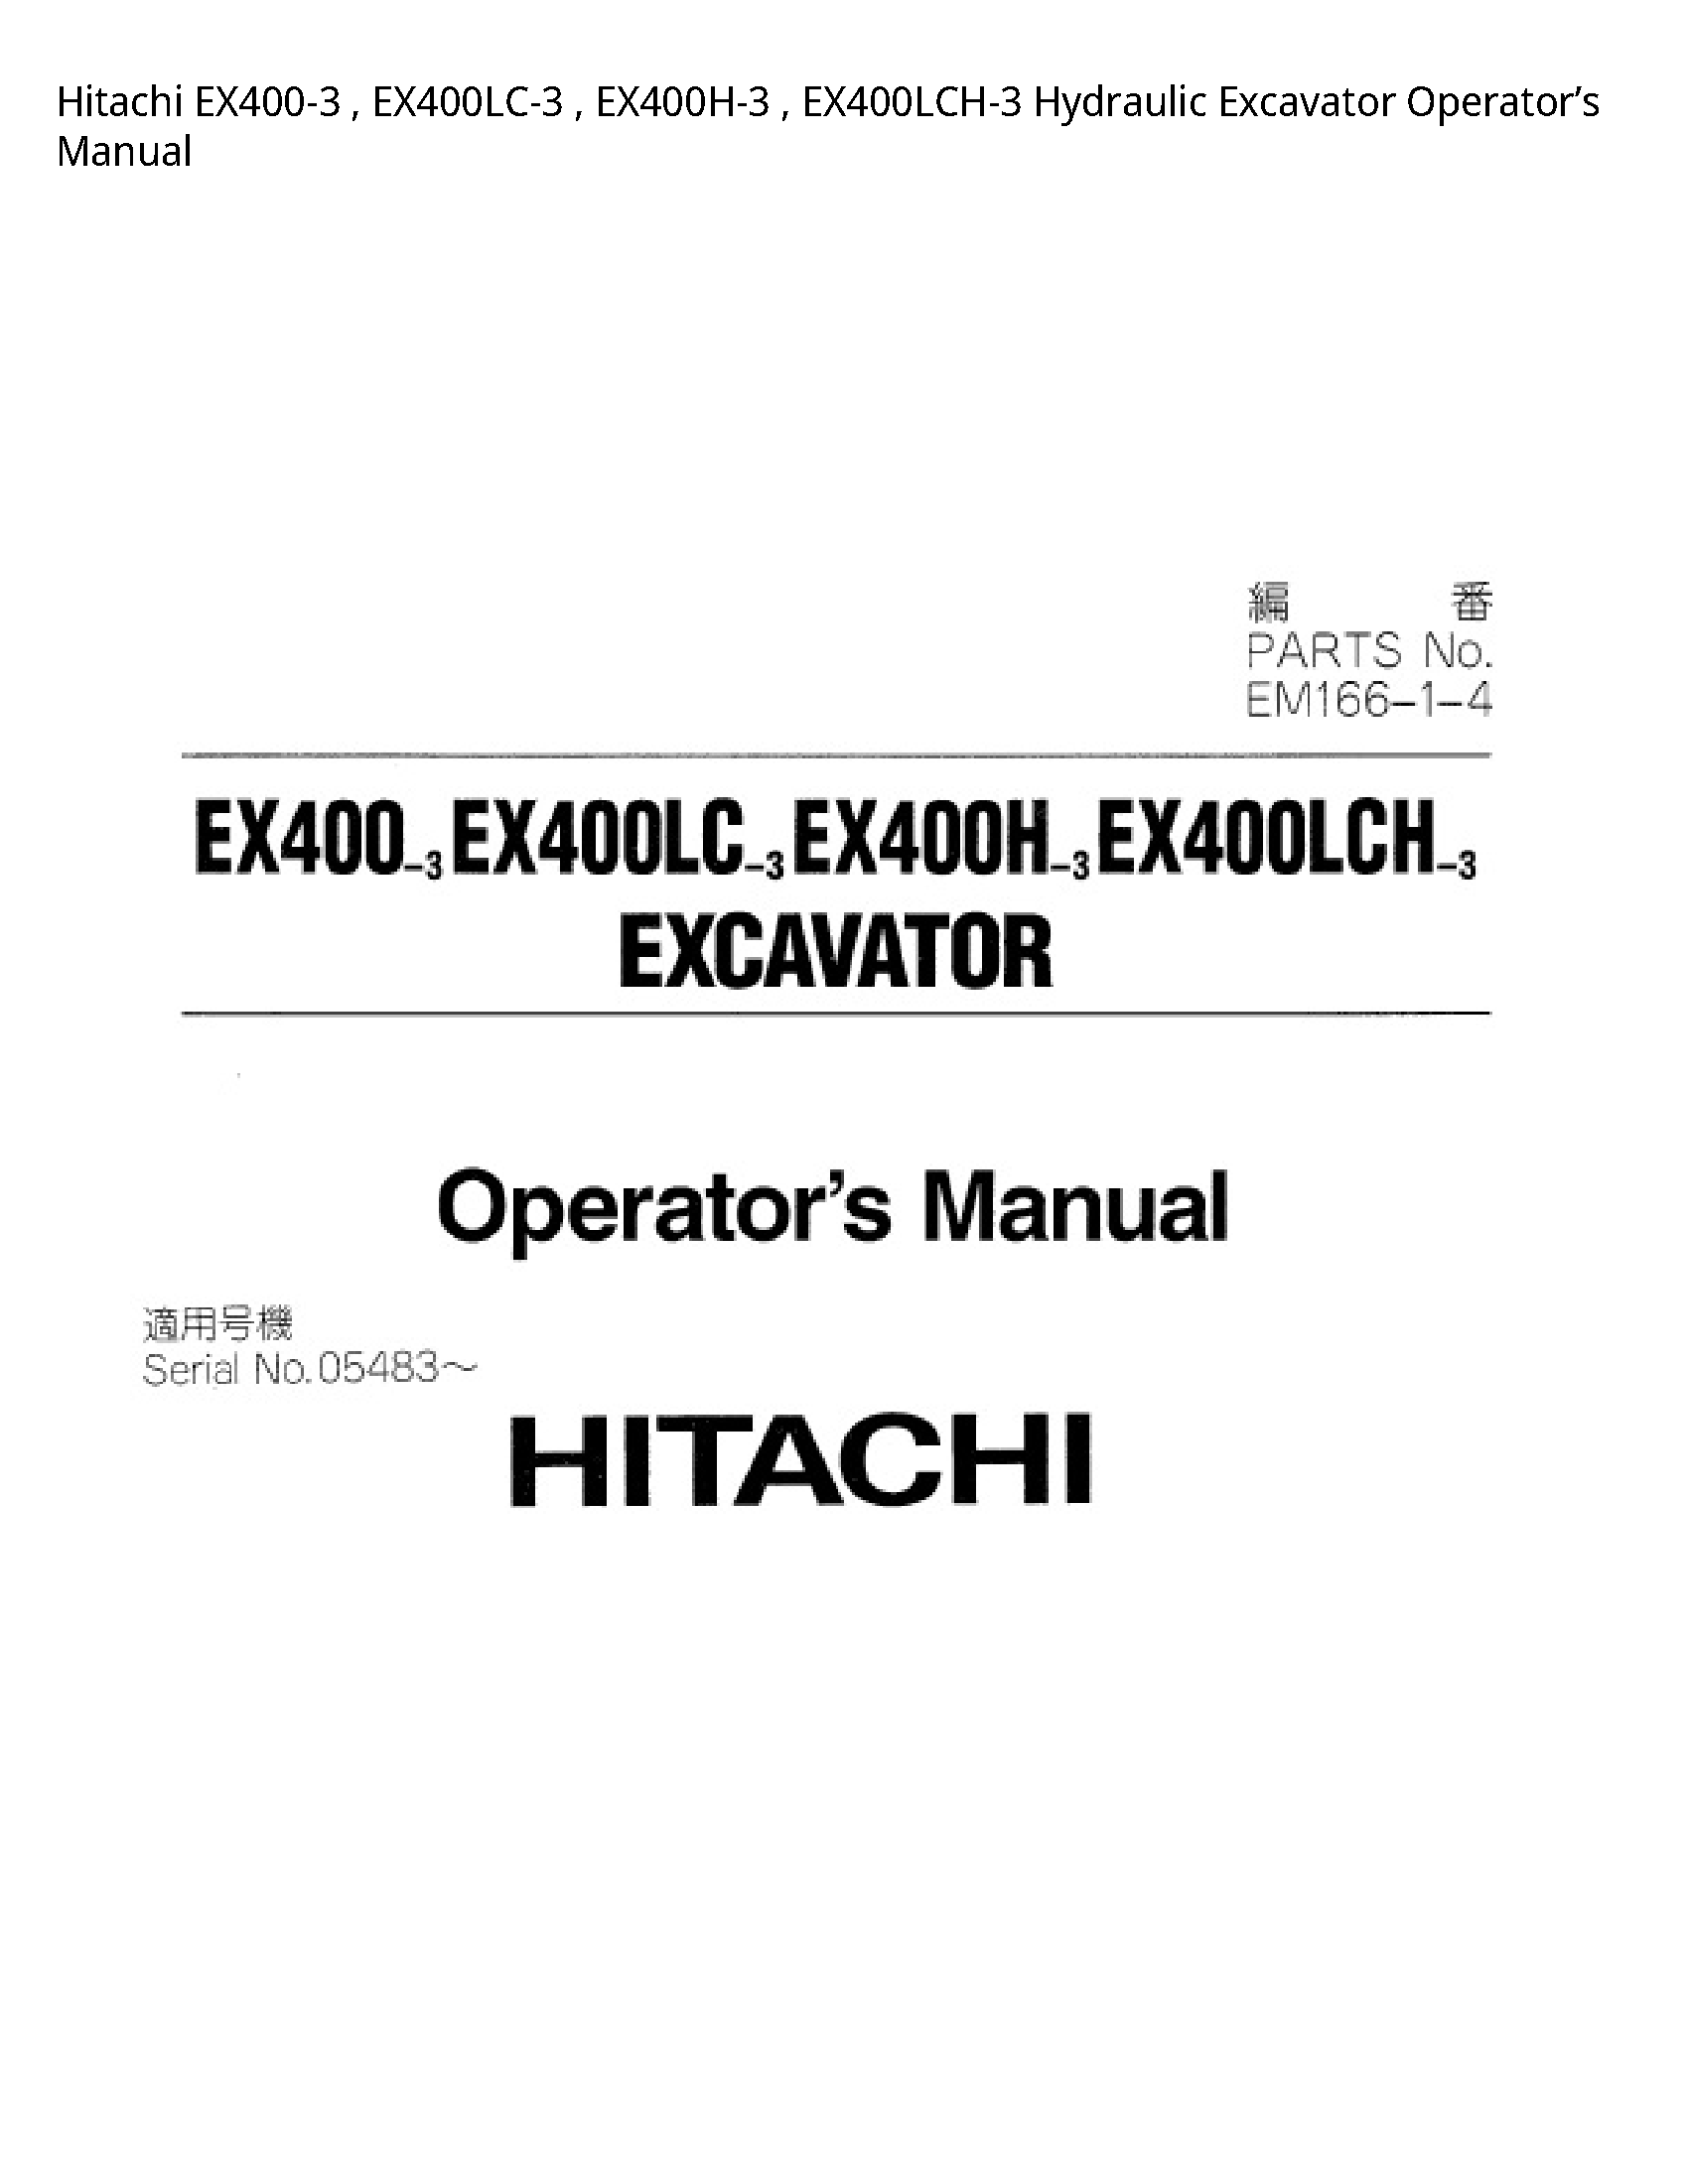 Hitachi EX400-3 Hydraulic Excavator Operator’s manual